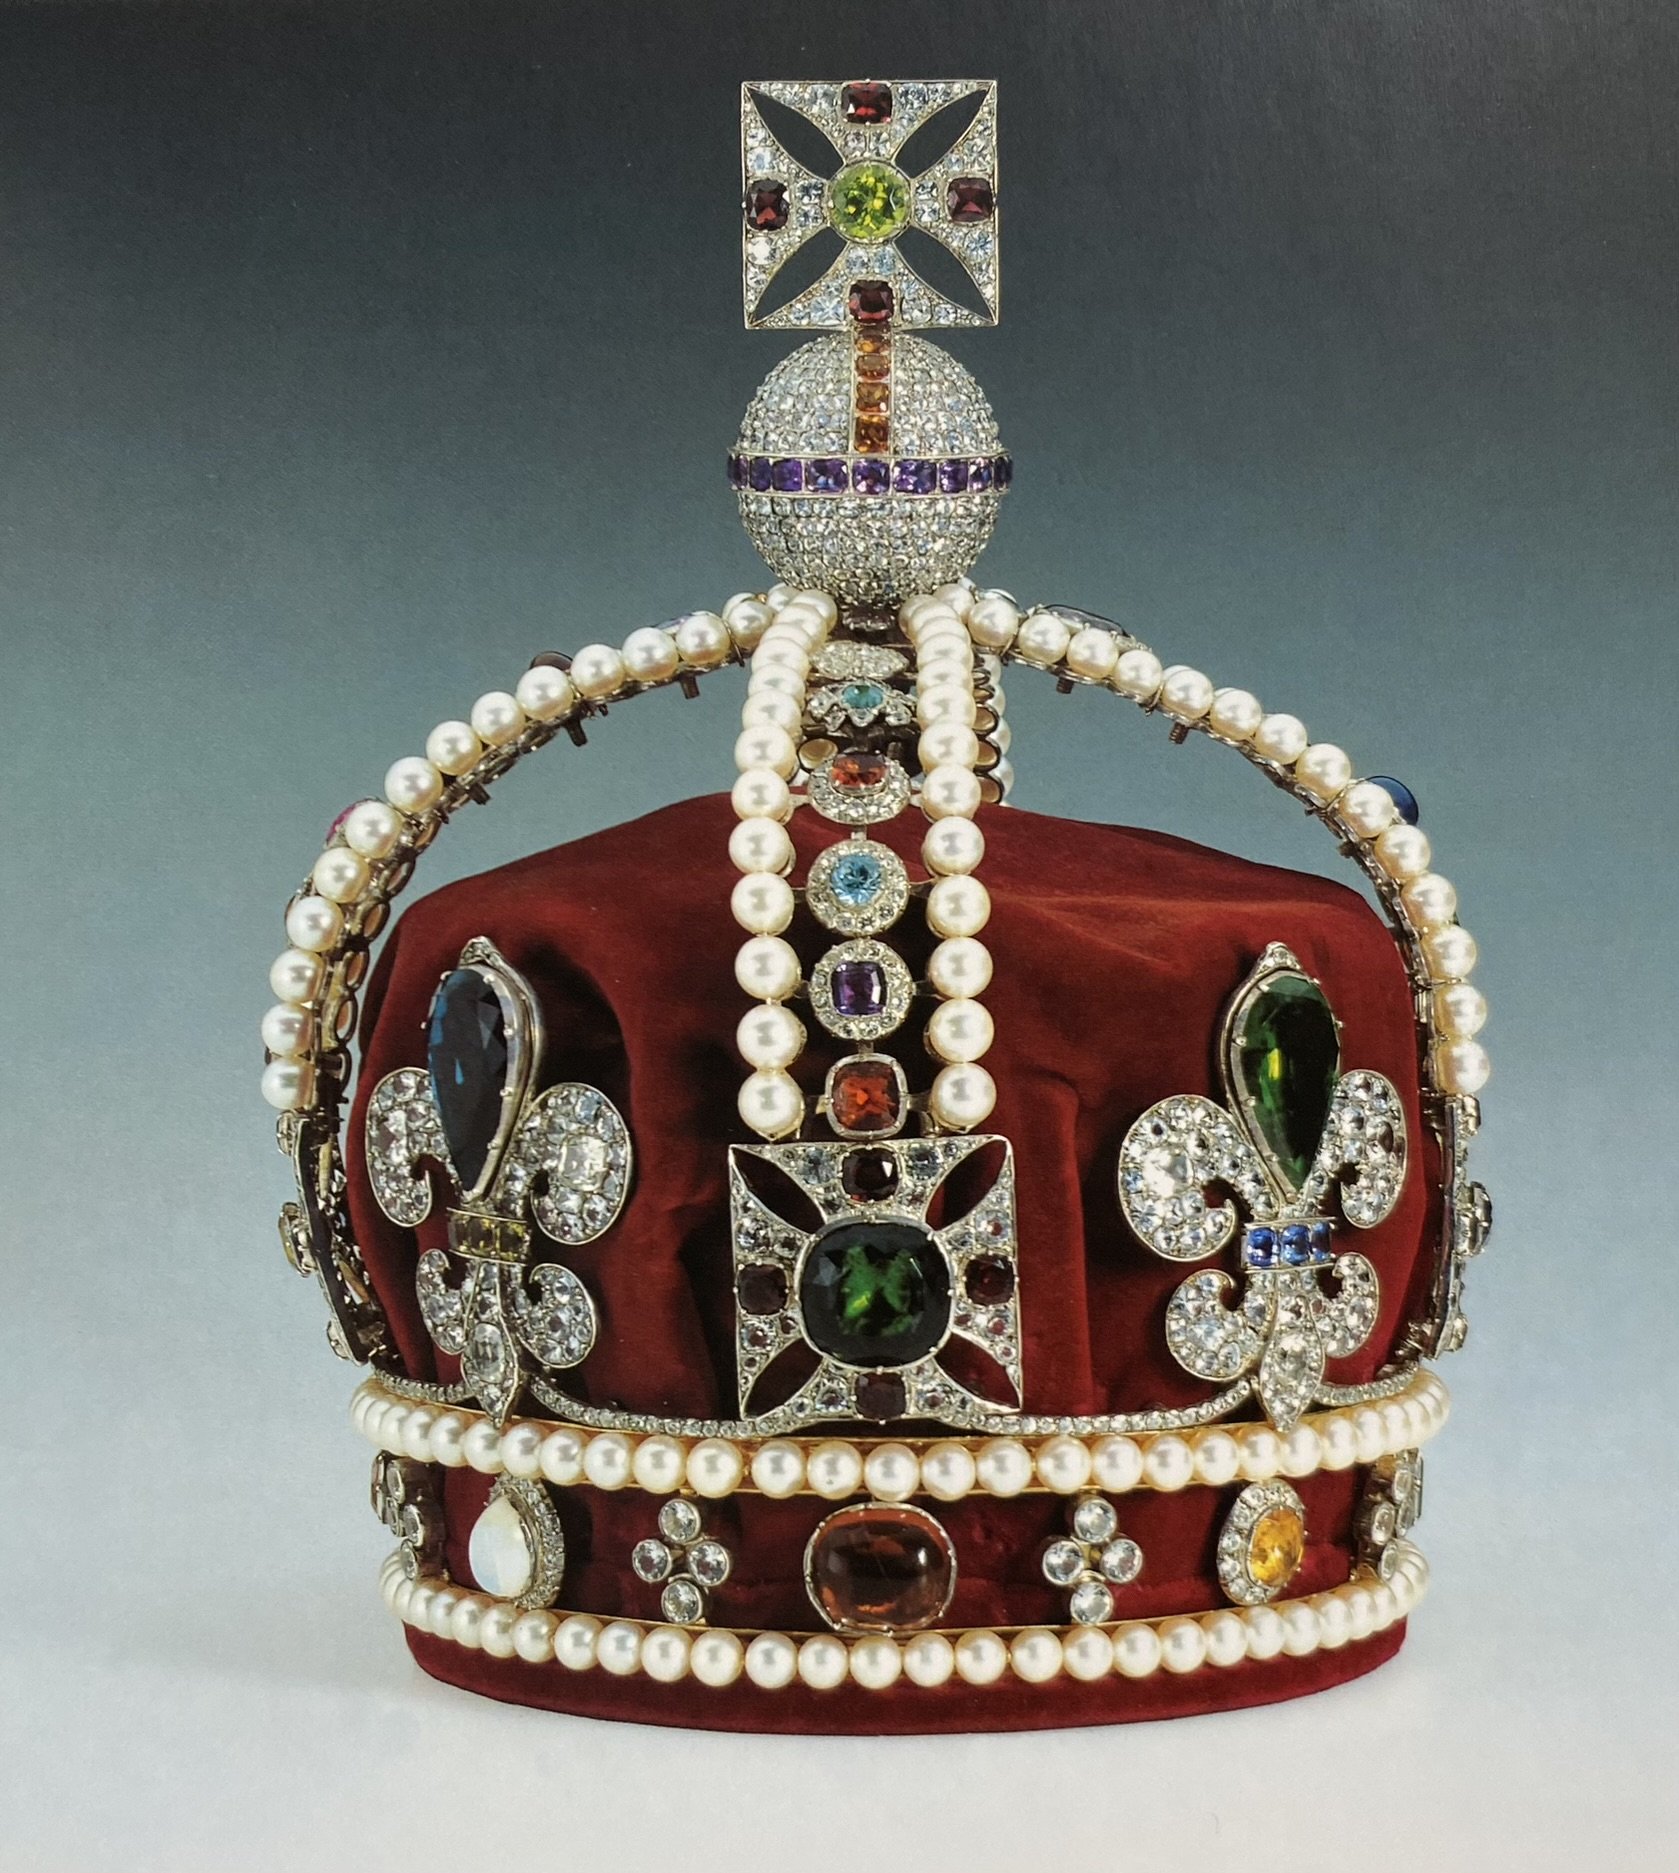 Queen Adelaide’s replica crown